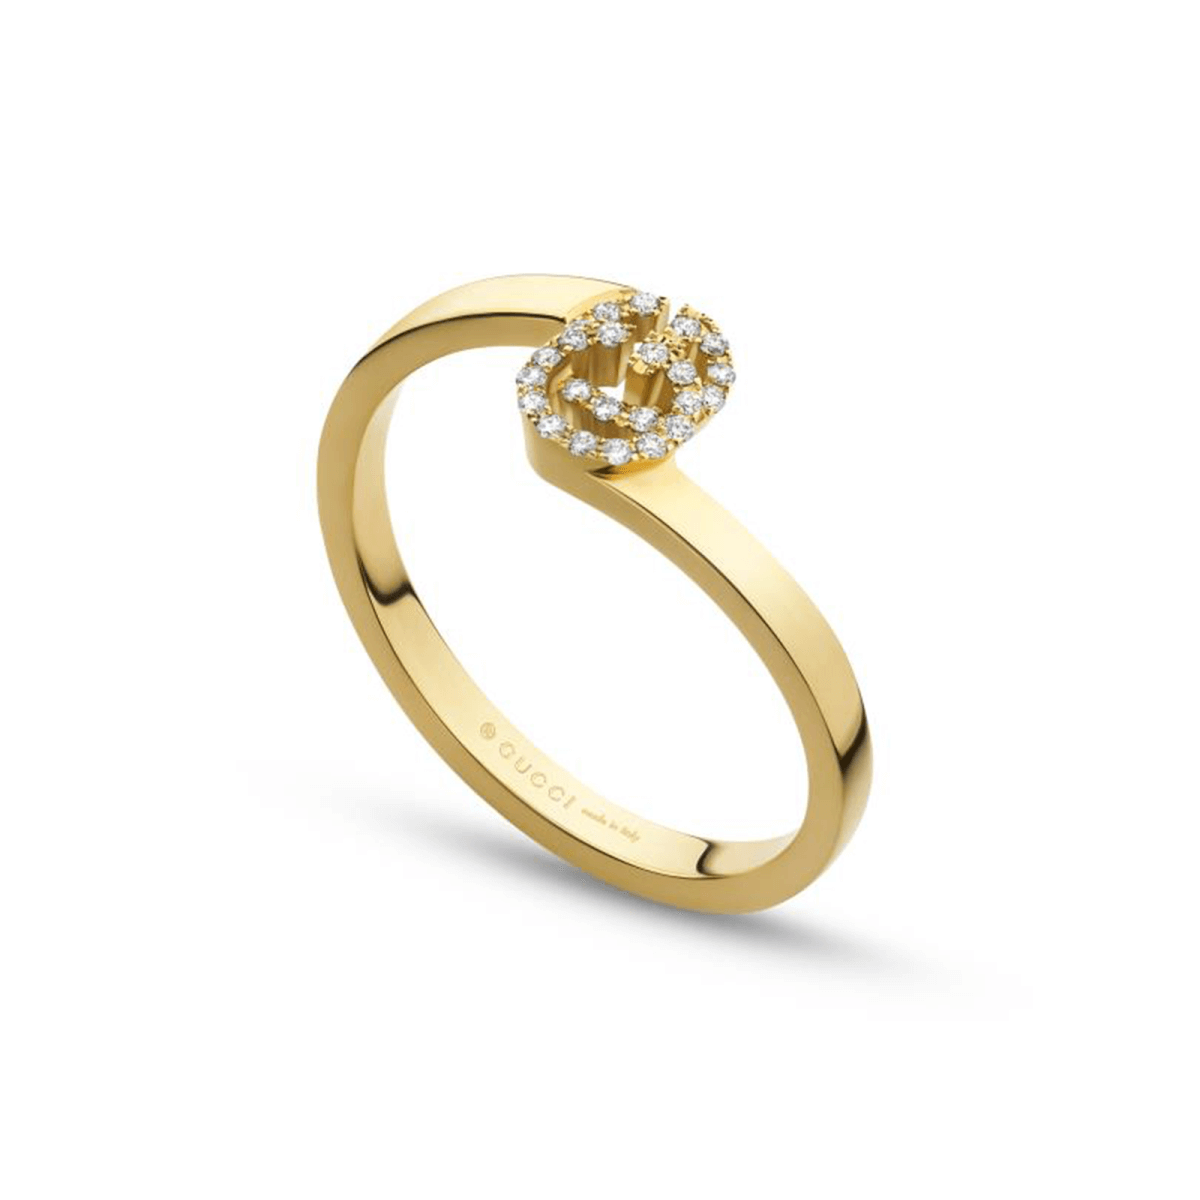 18ct Yellow Gold Running G Diamond Ring - Size 6.5